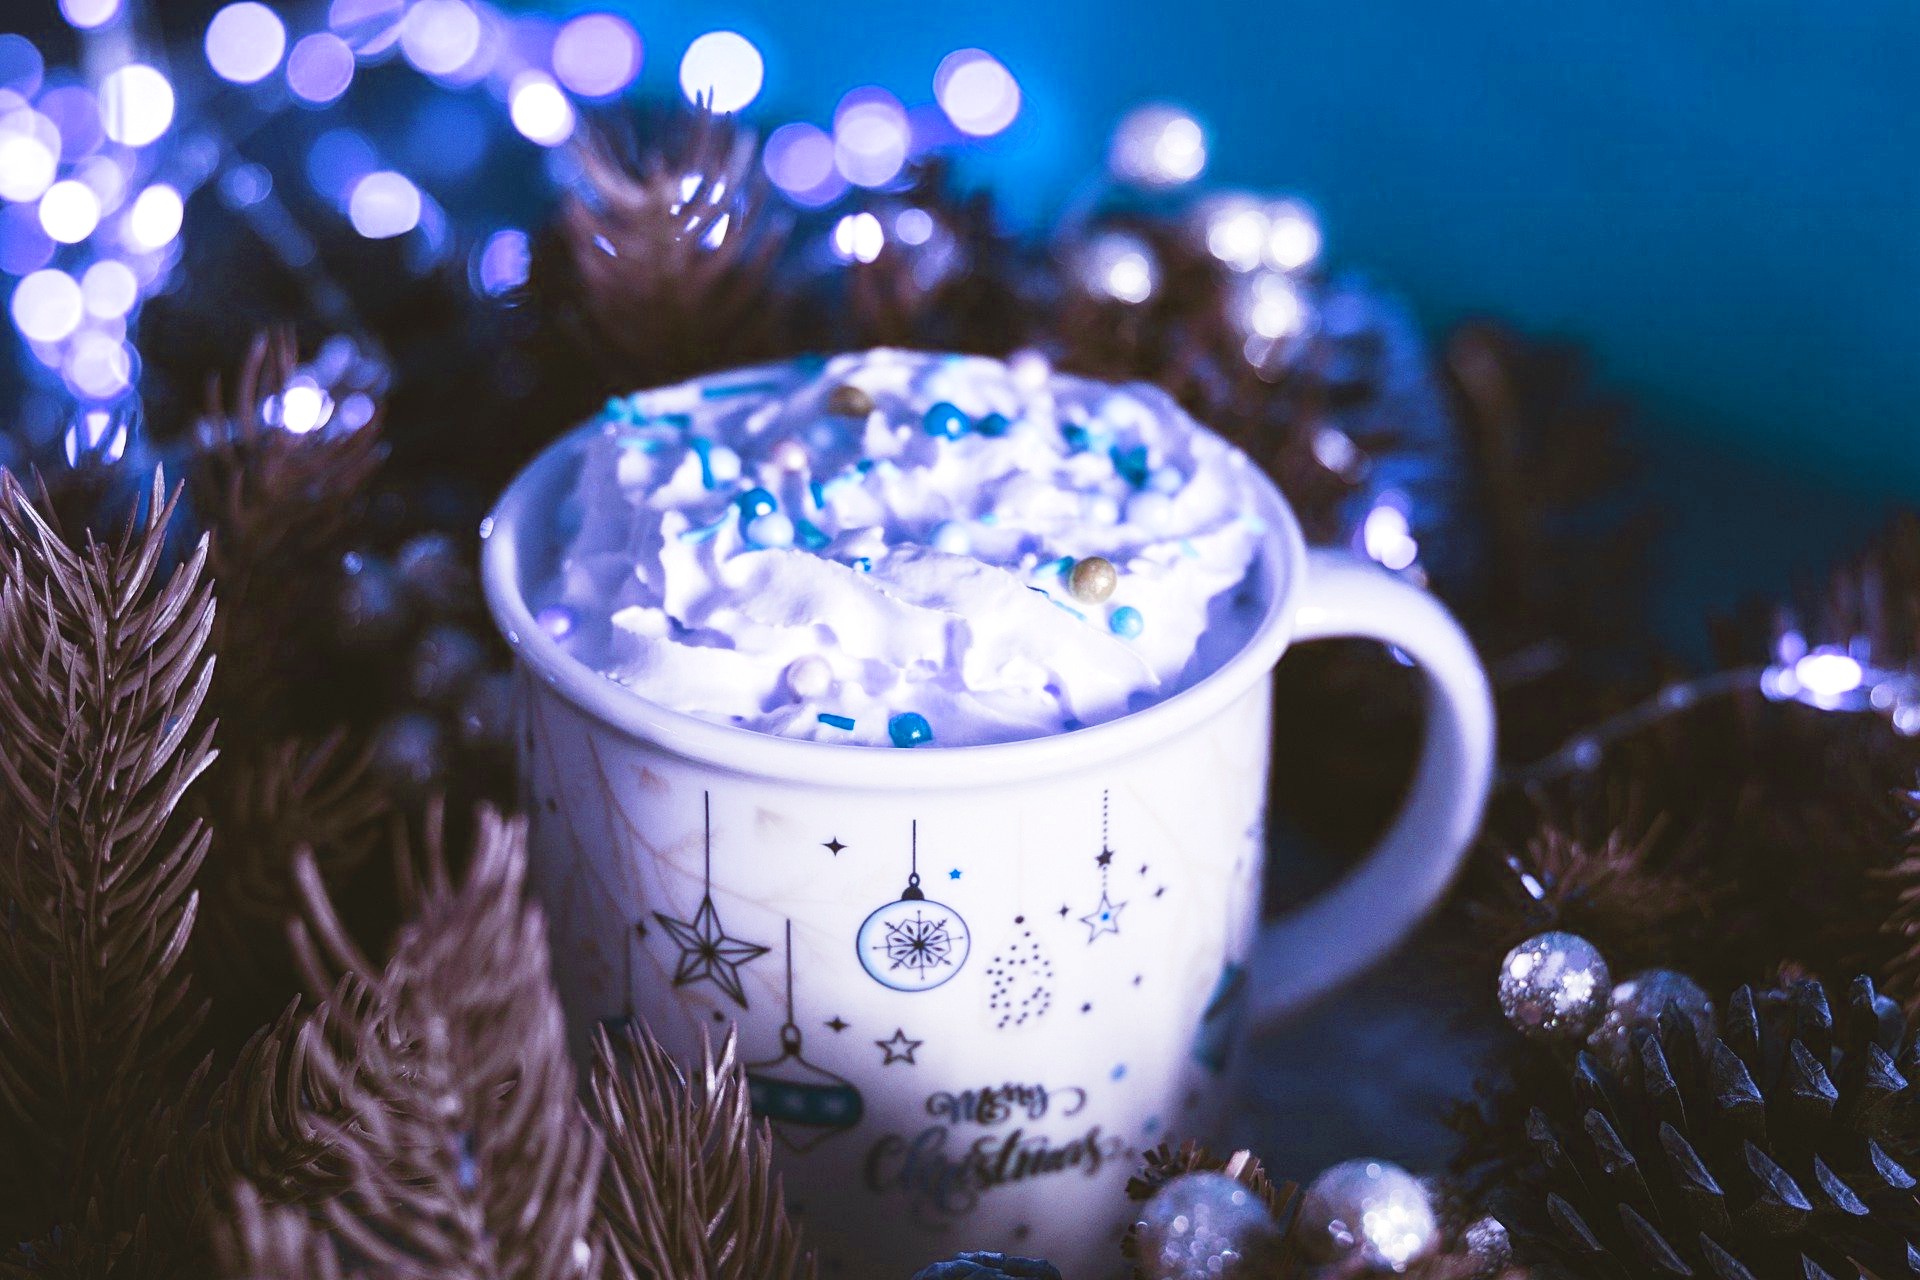 <img src="hot.jpg" alt="hot chocolate for a self-care Christmas"/> 